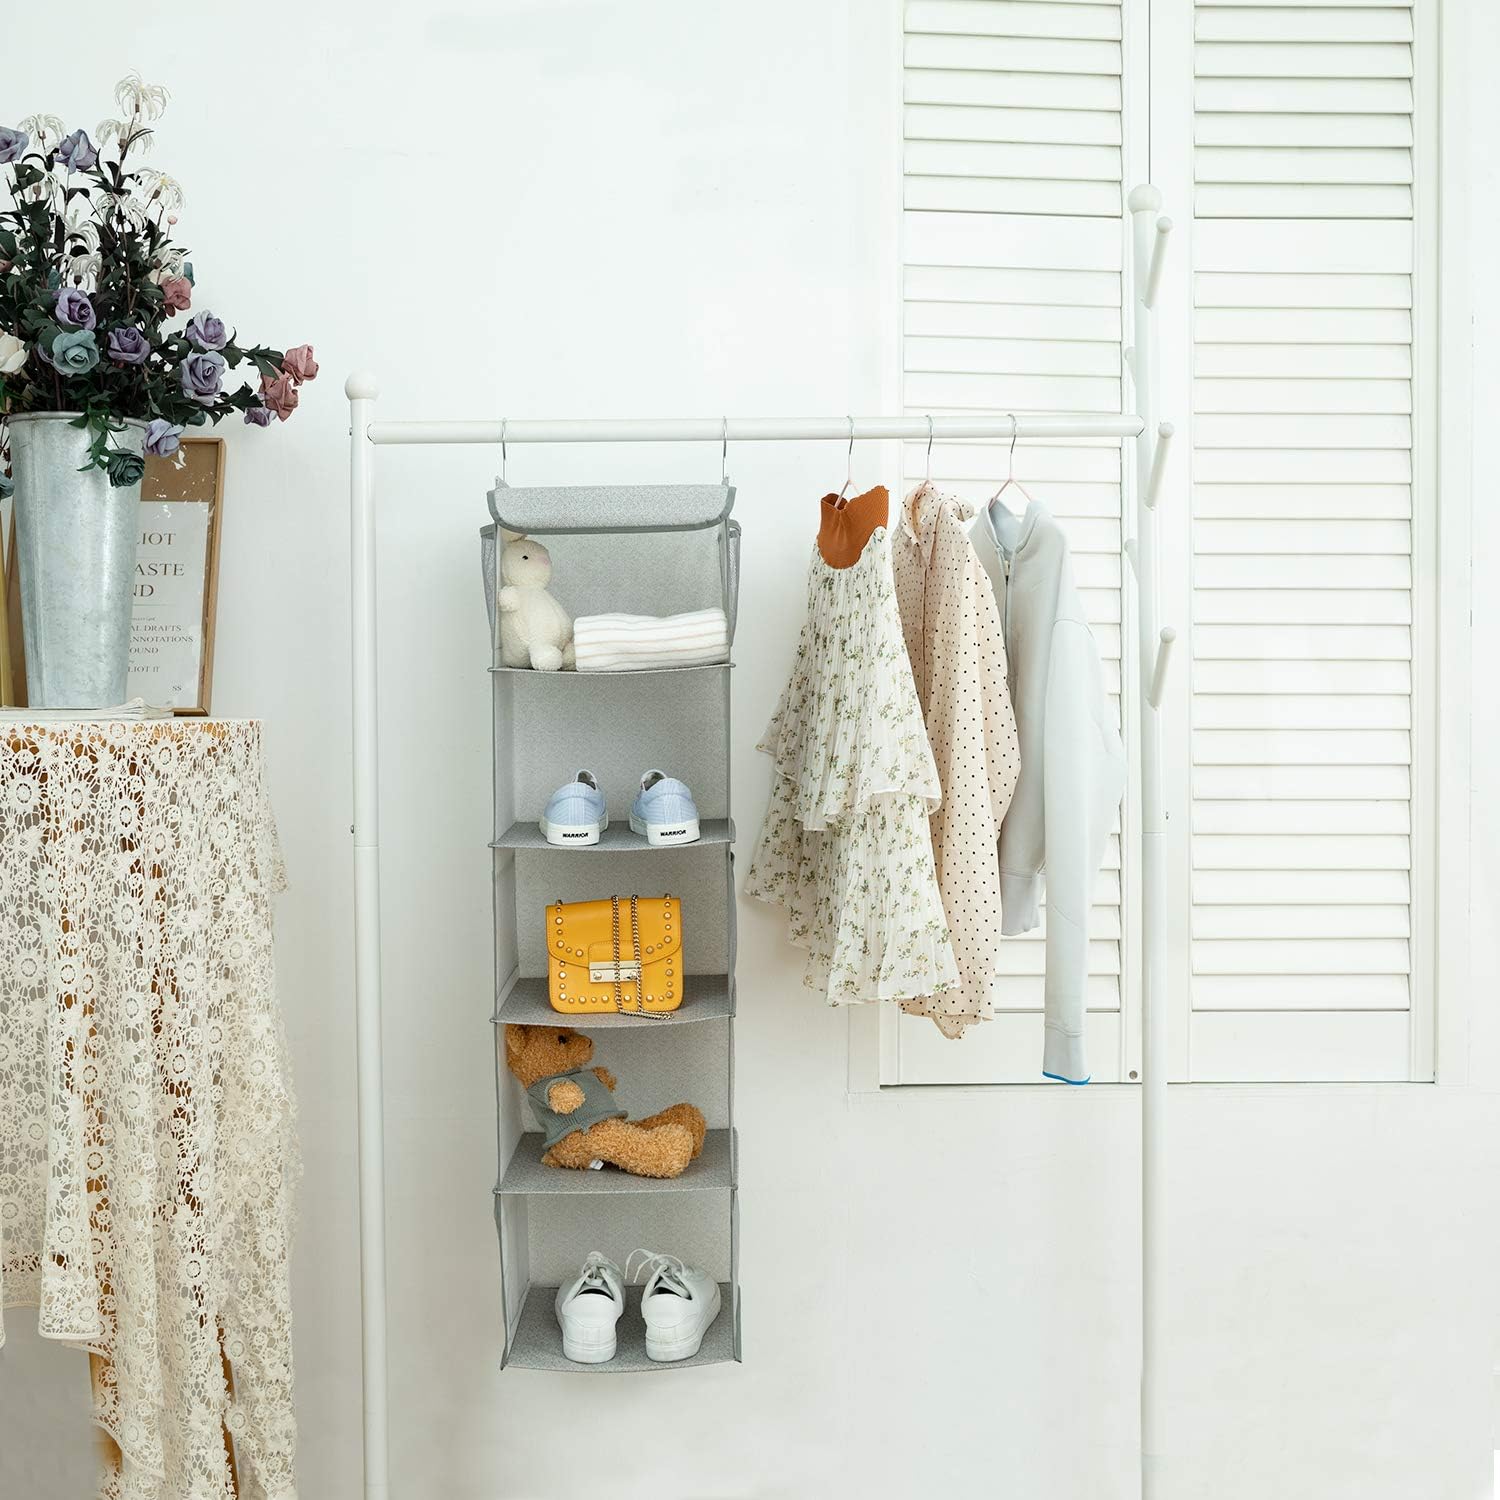 Blushbees® 5-Shelf Hanging Closet Organizer - 2 Pack, Light Gray